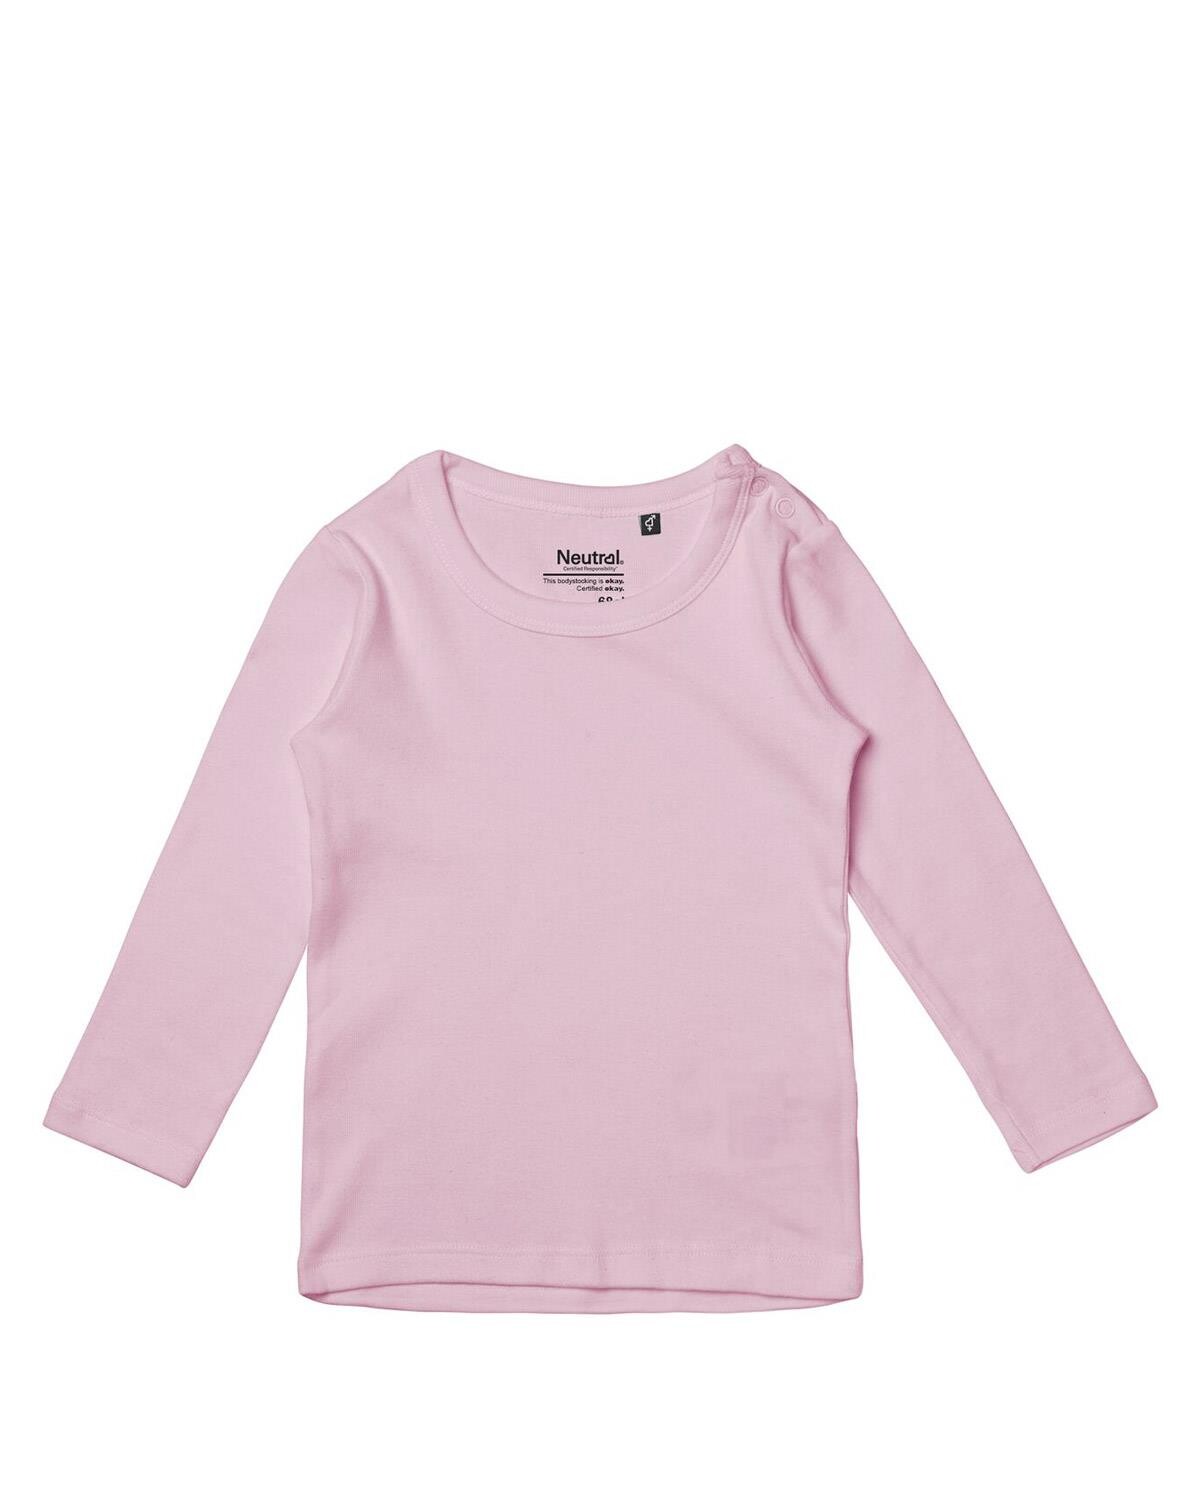 Neutral Organic - Baby Long Sleeve T-shirt (Pink, 86)